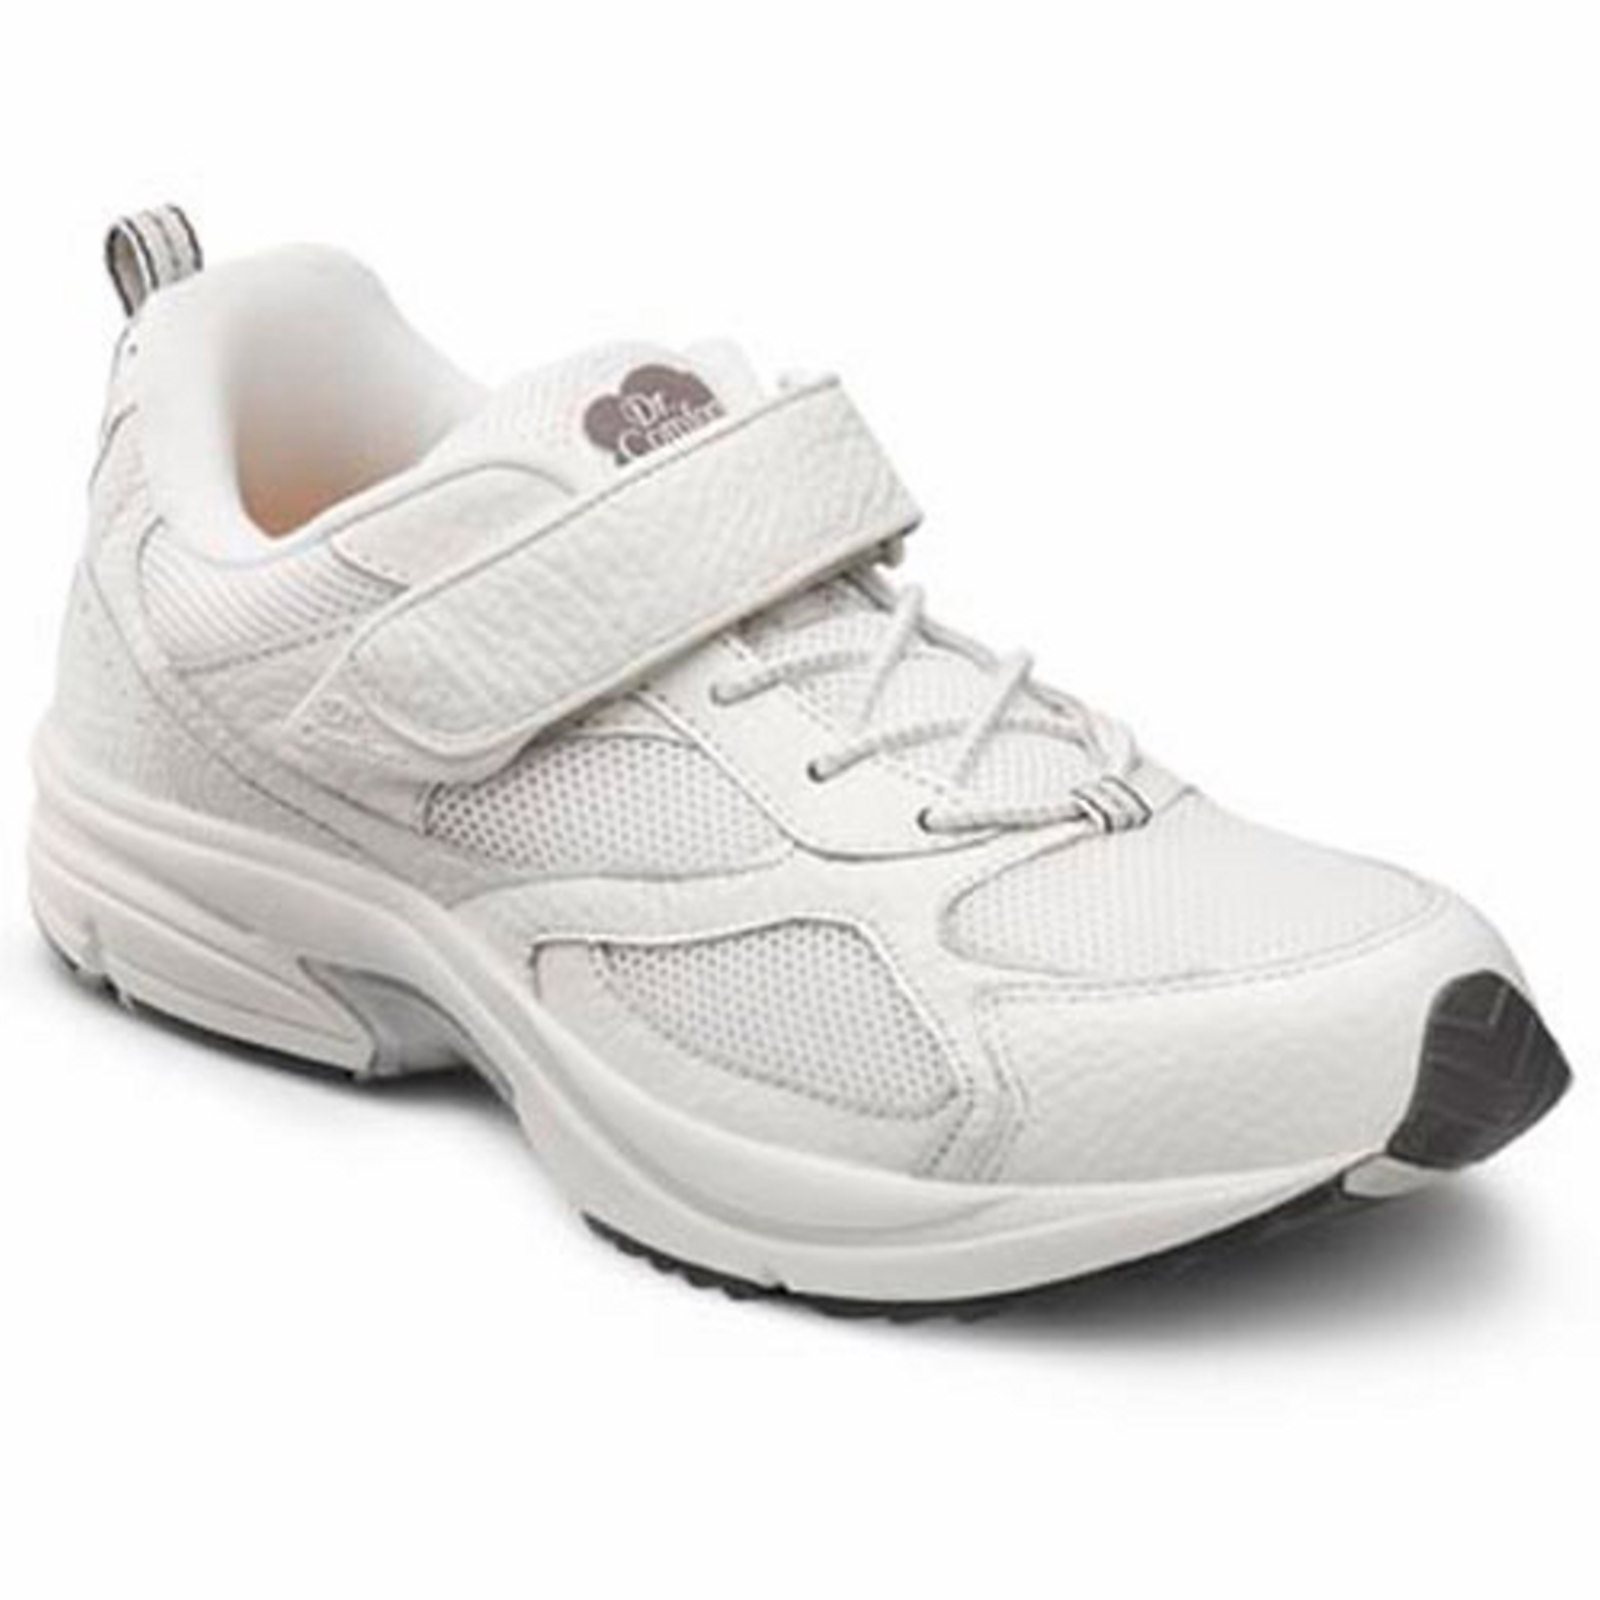 Dr. Comfort Endurance Men's Athletic Shoe: 14 Medium (B/D) White Elastic Lace w/Strap - image 1 of 4